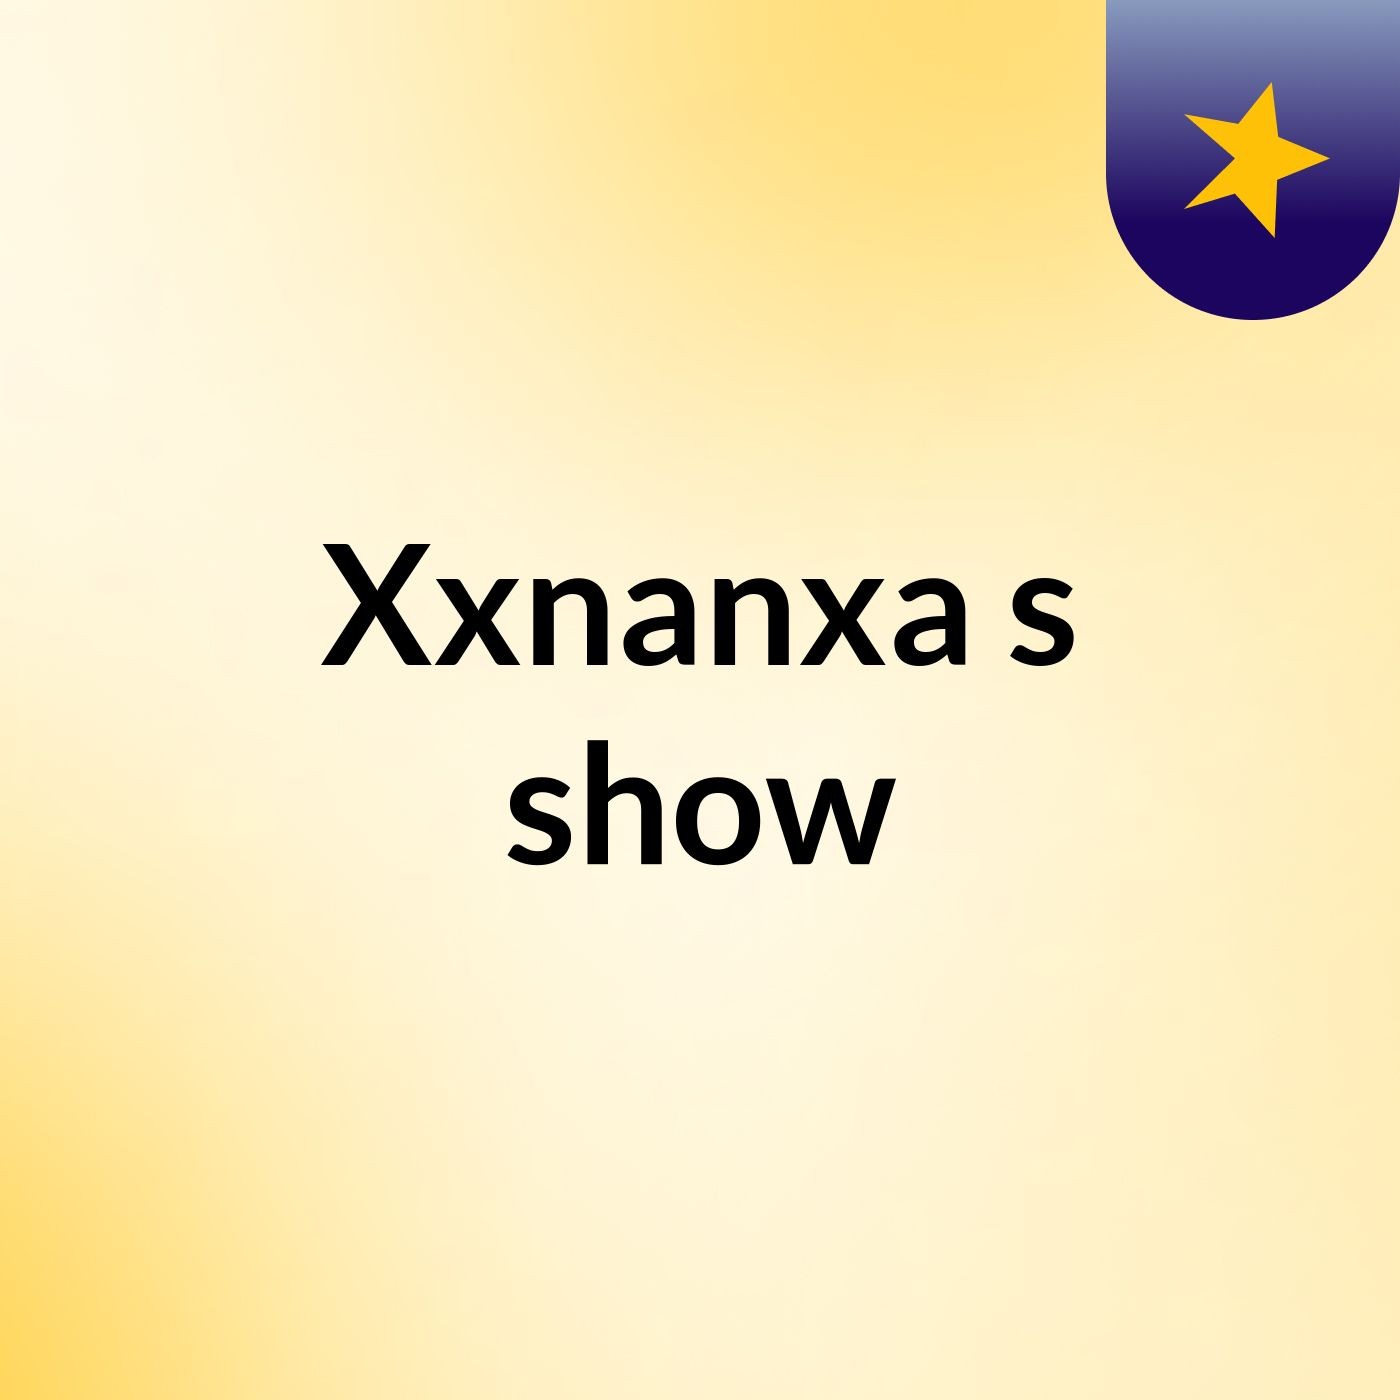 Xxnanxa's show